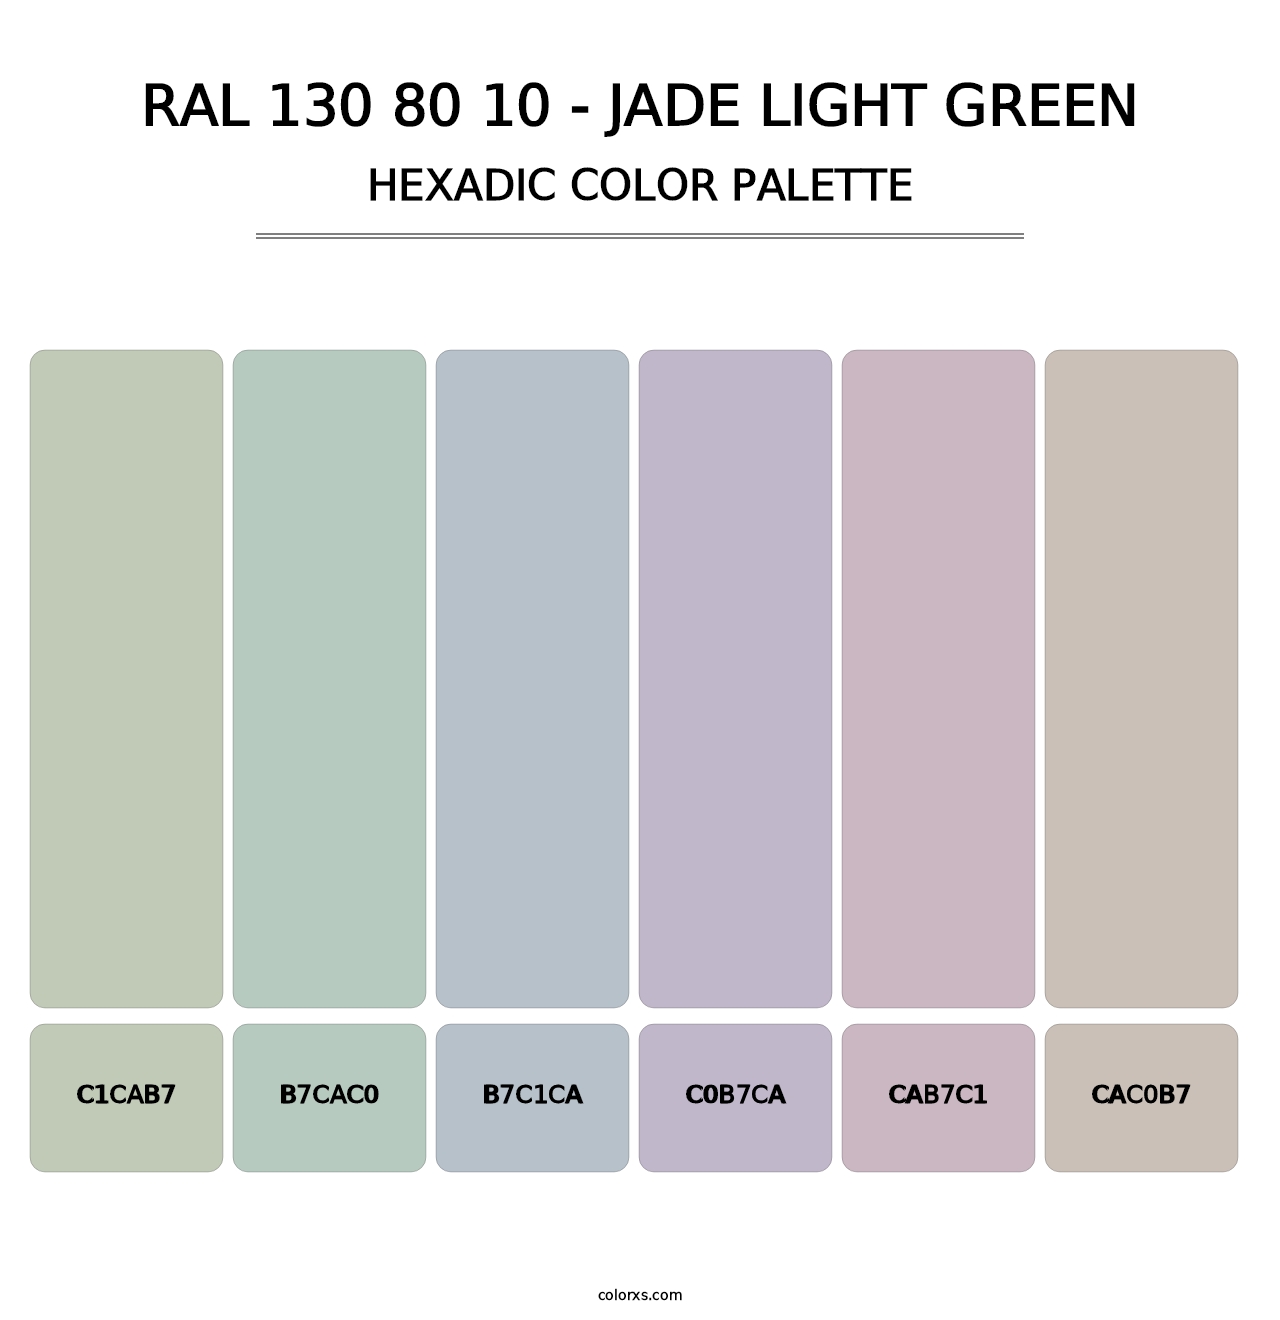 RAL 130 80 10 - Jade Light Green - Hexadic Color Palette